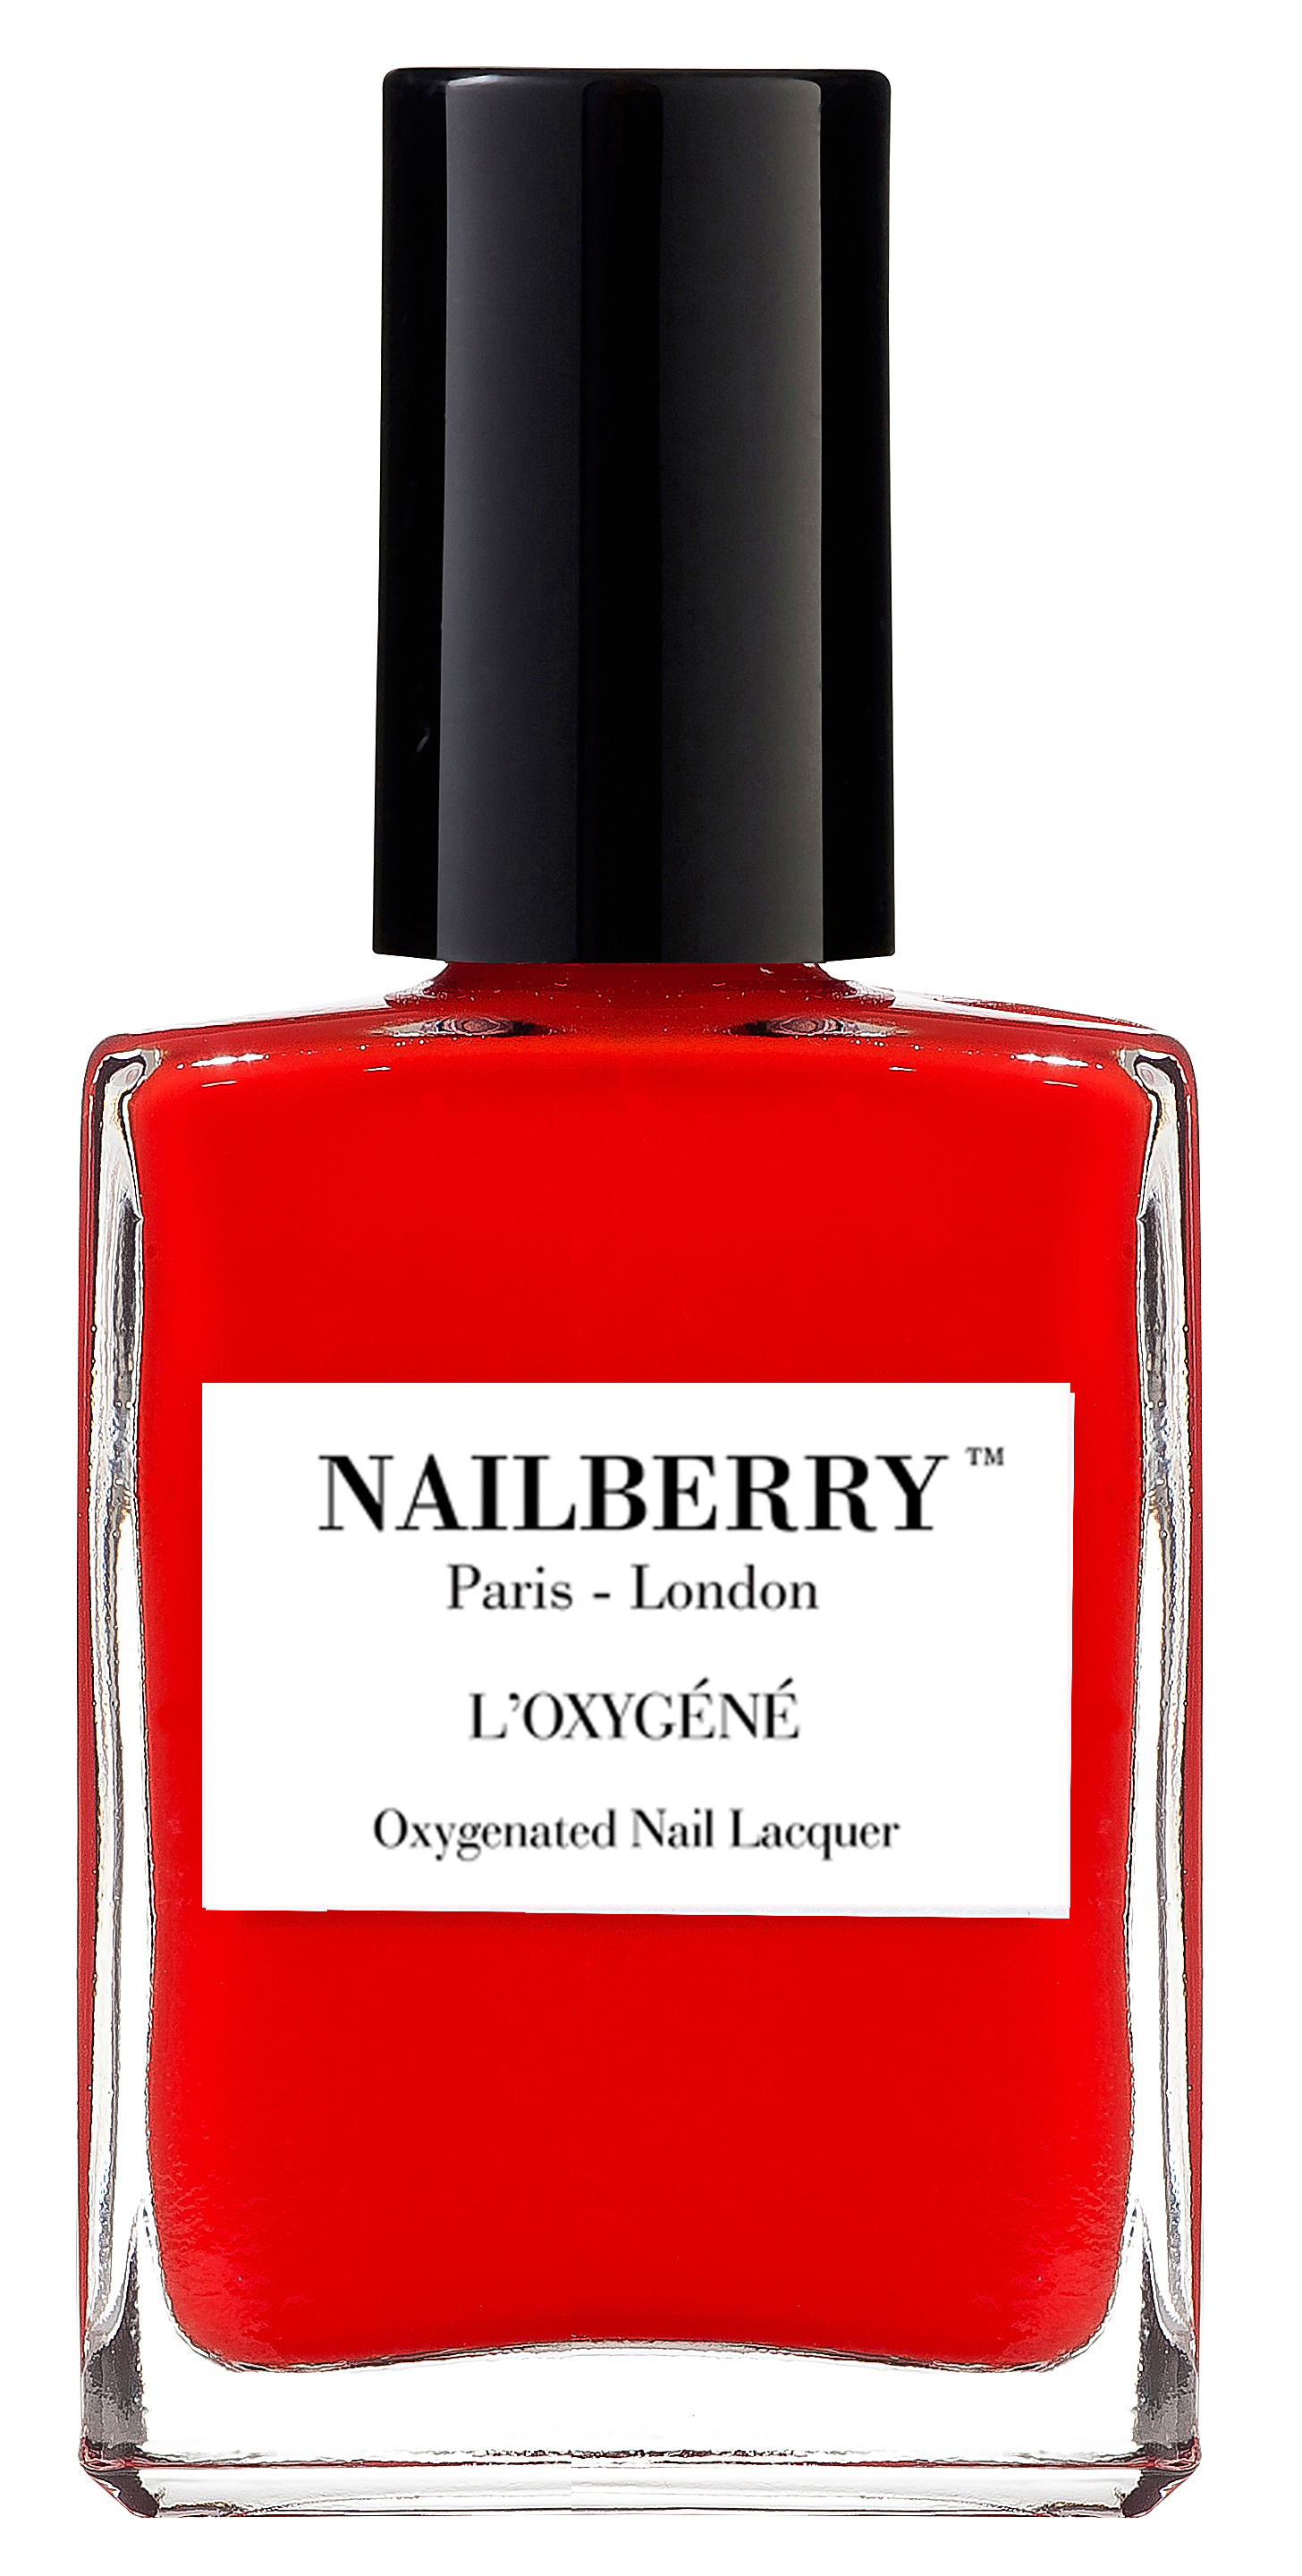 L'Oxygéné Nailberry Cherry Cherie nail polish